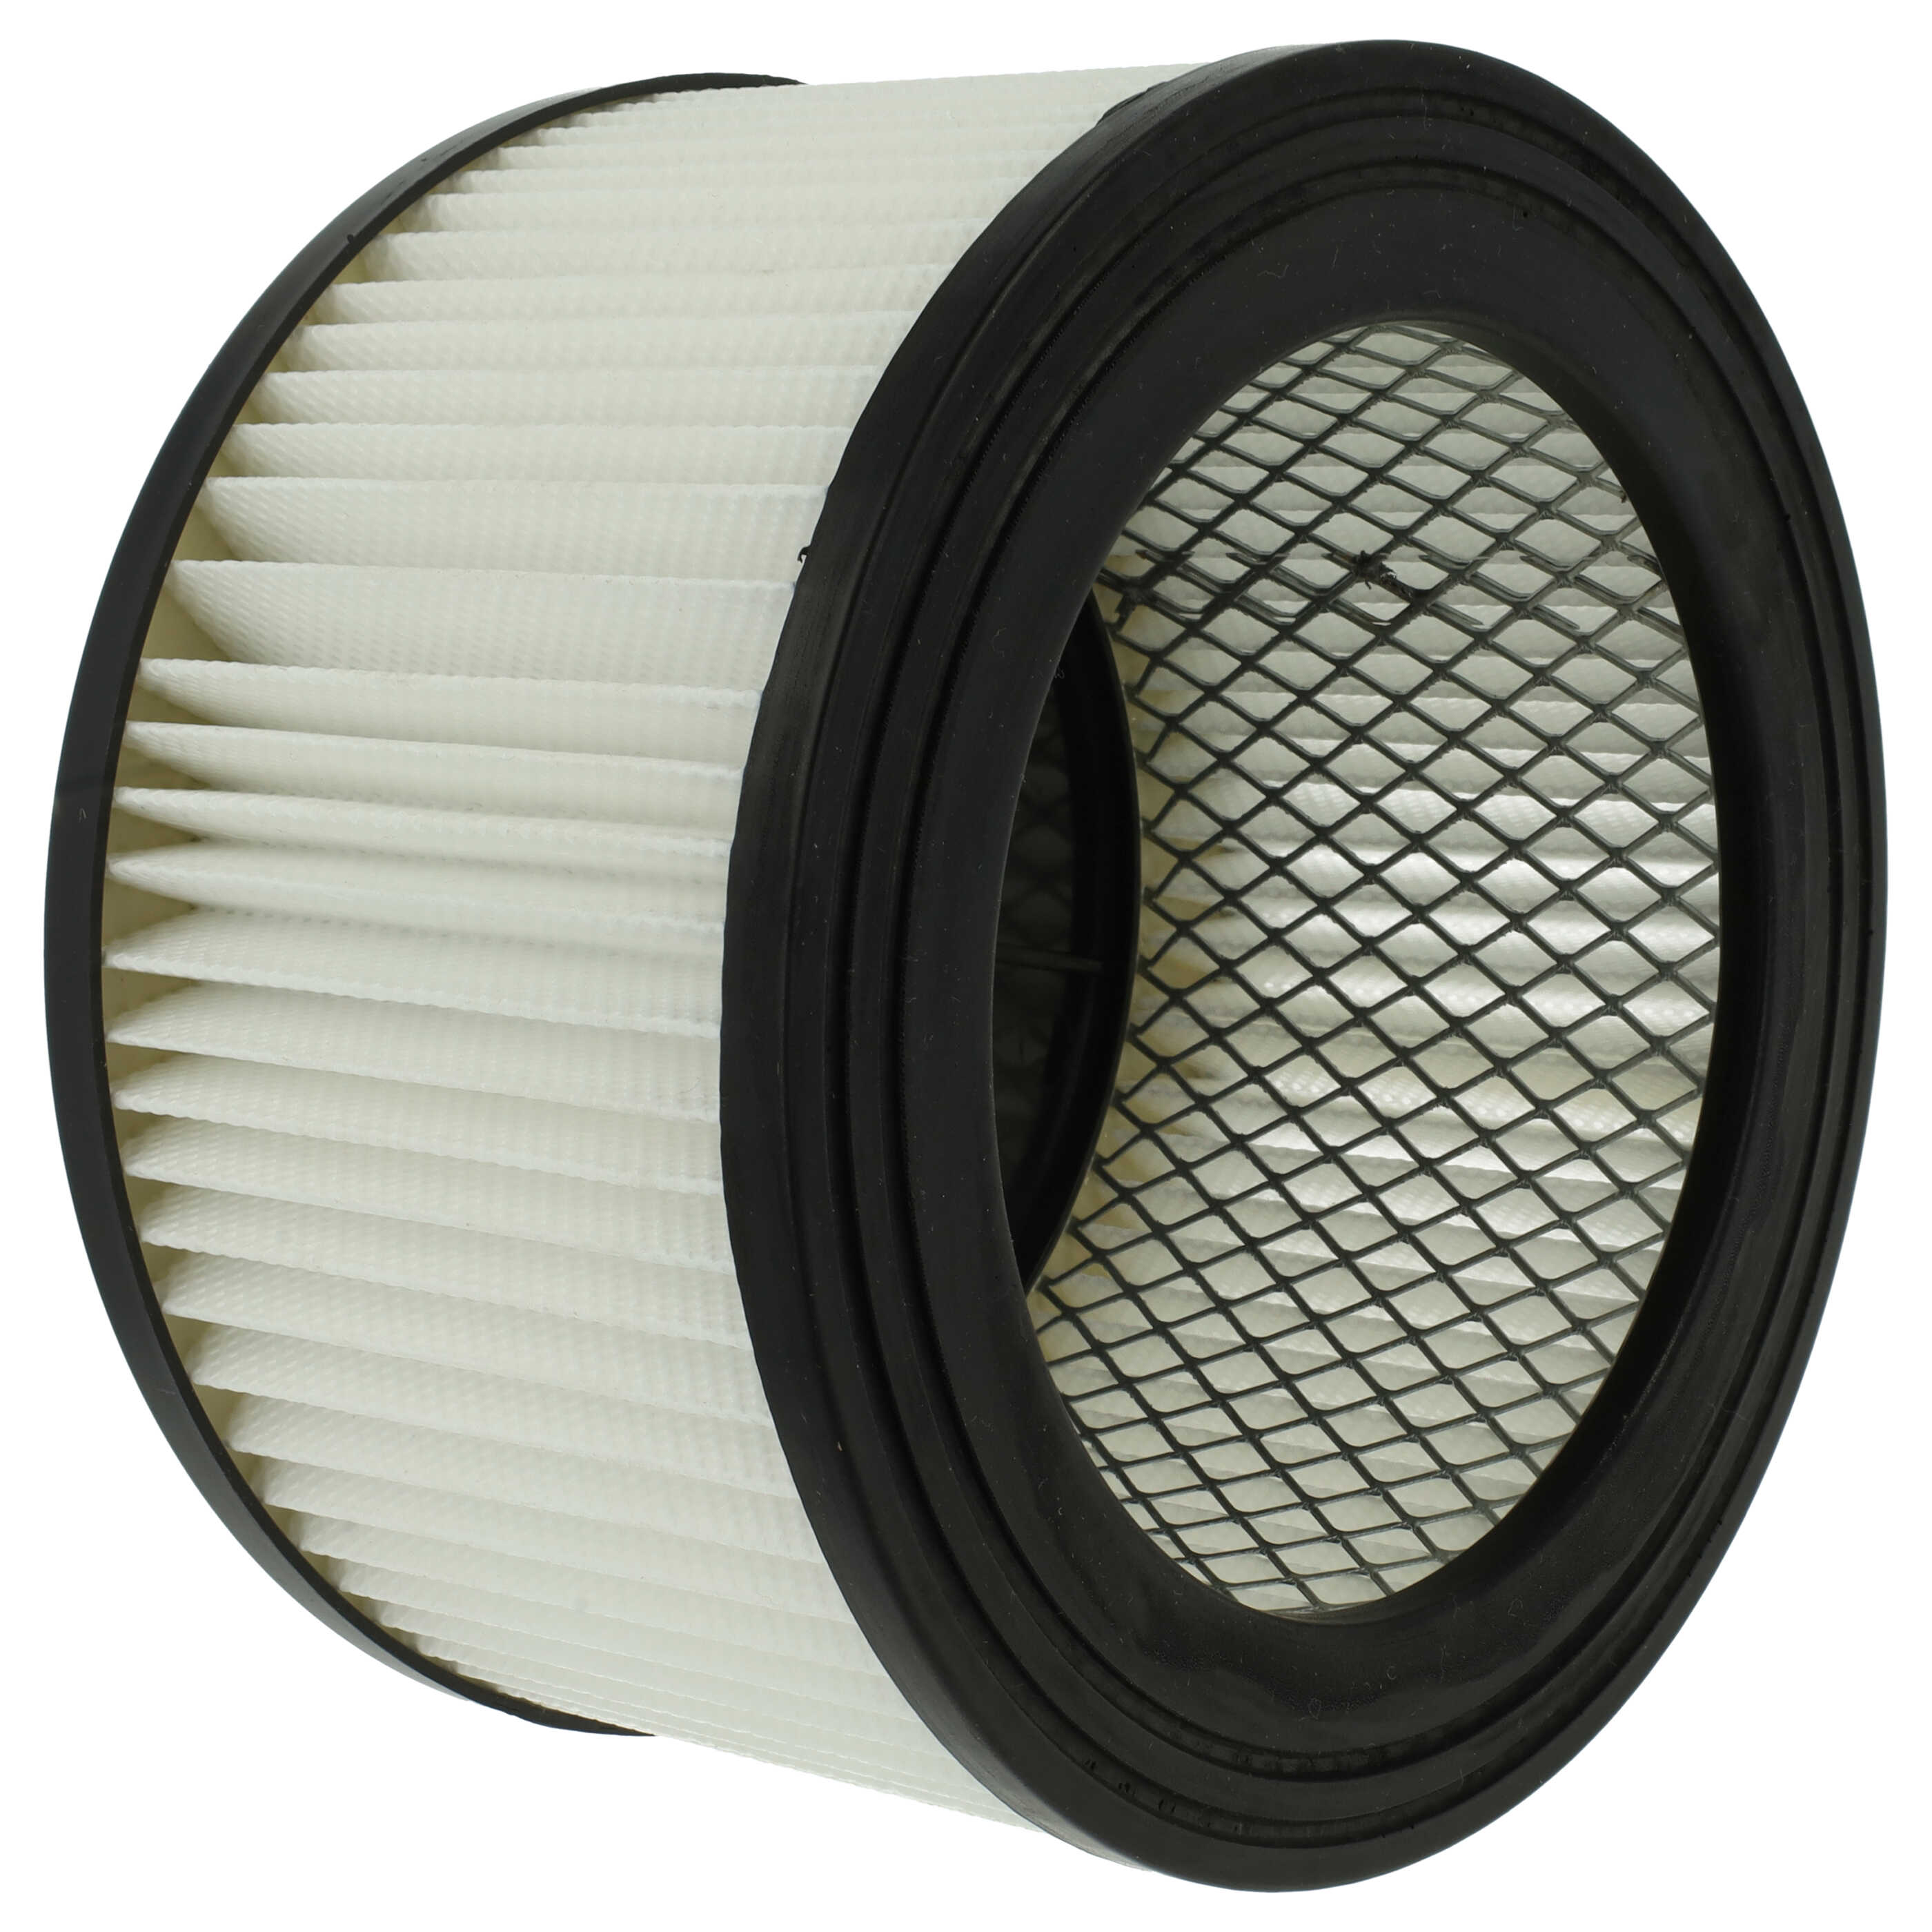 1x HEPA filter replaces Oxeo 760023 for PowerPlusChimney Sweep Vacuum